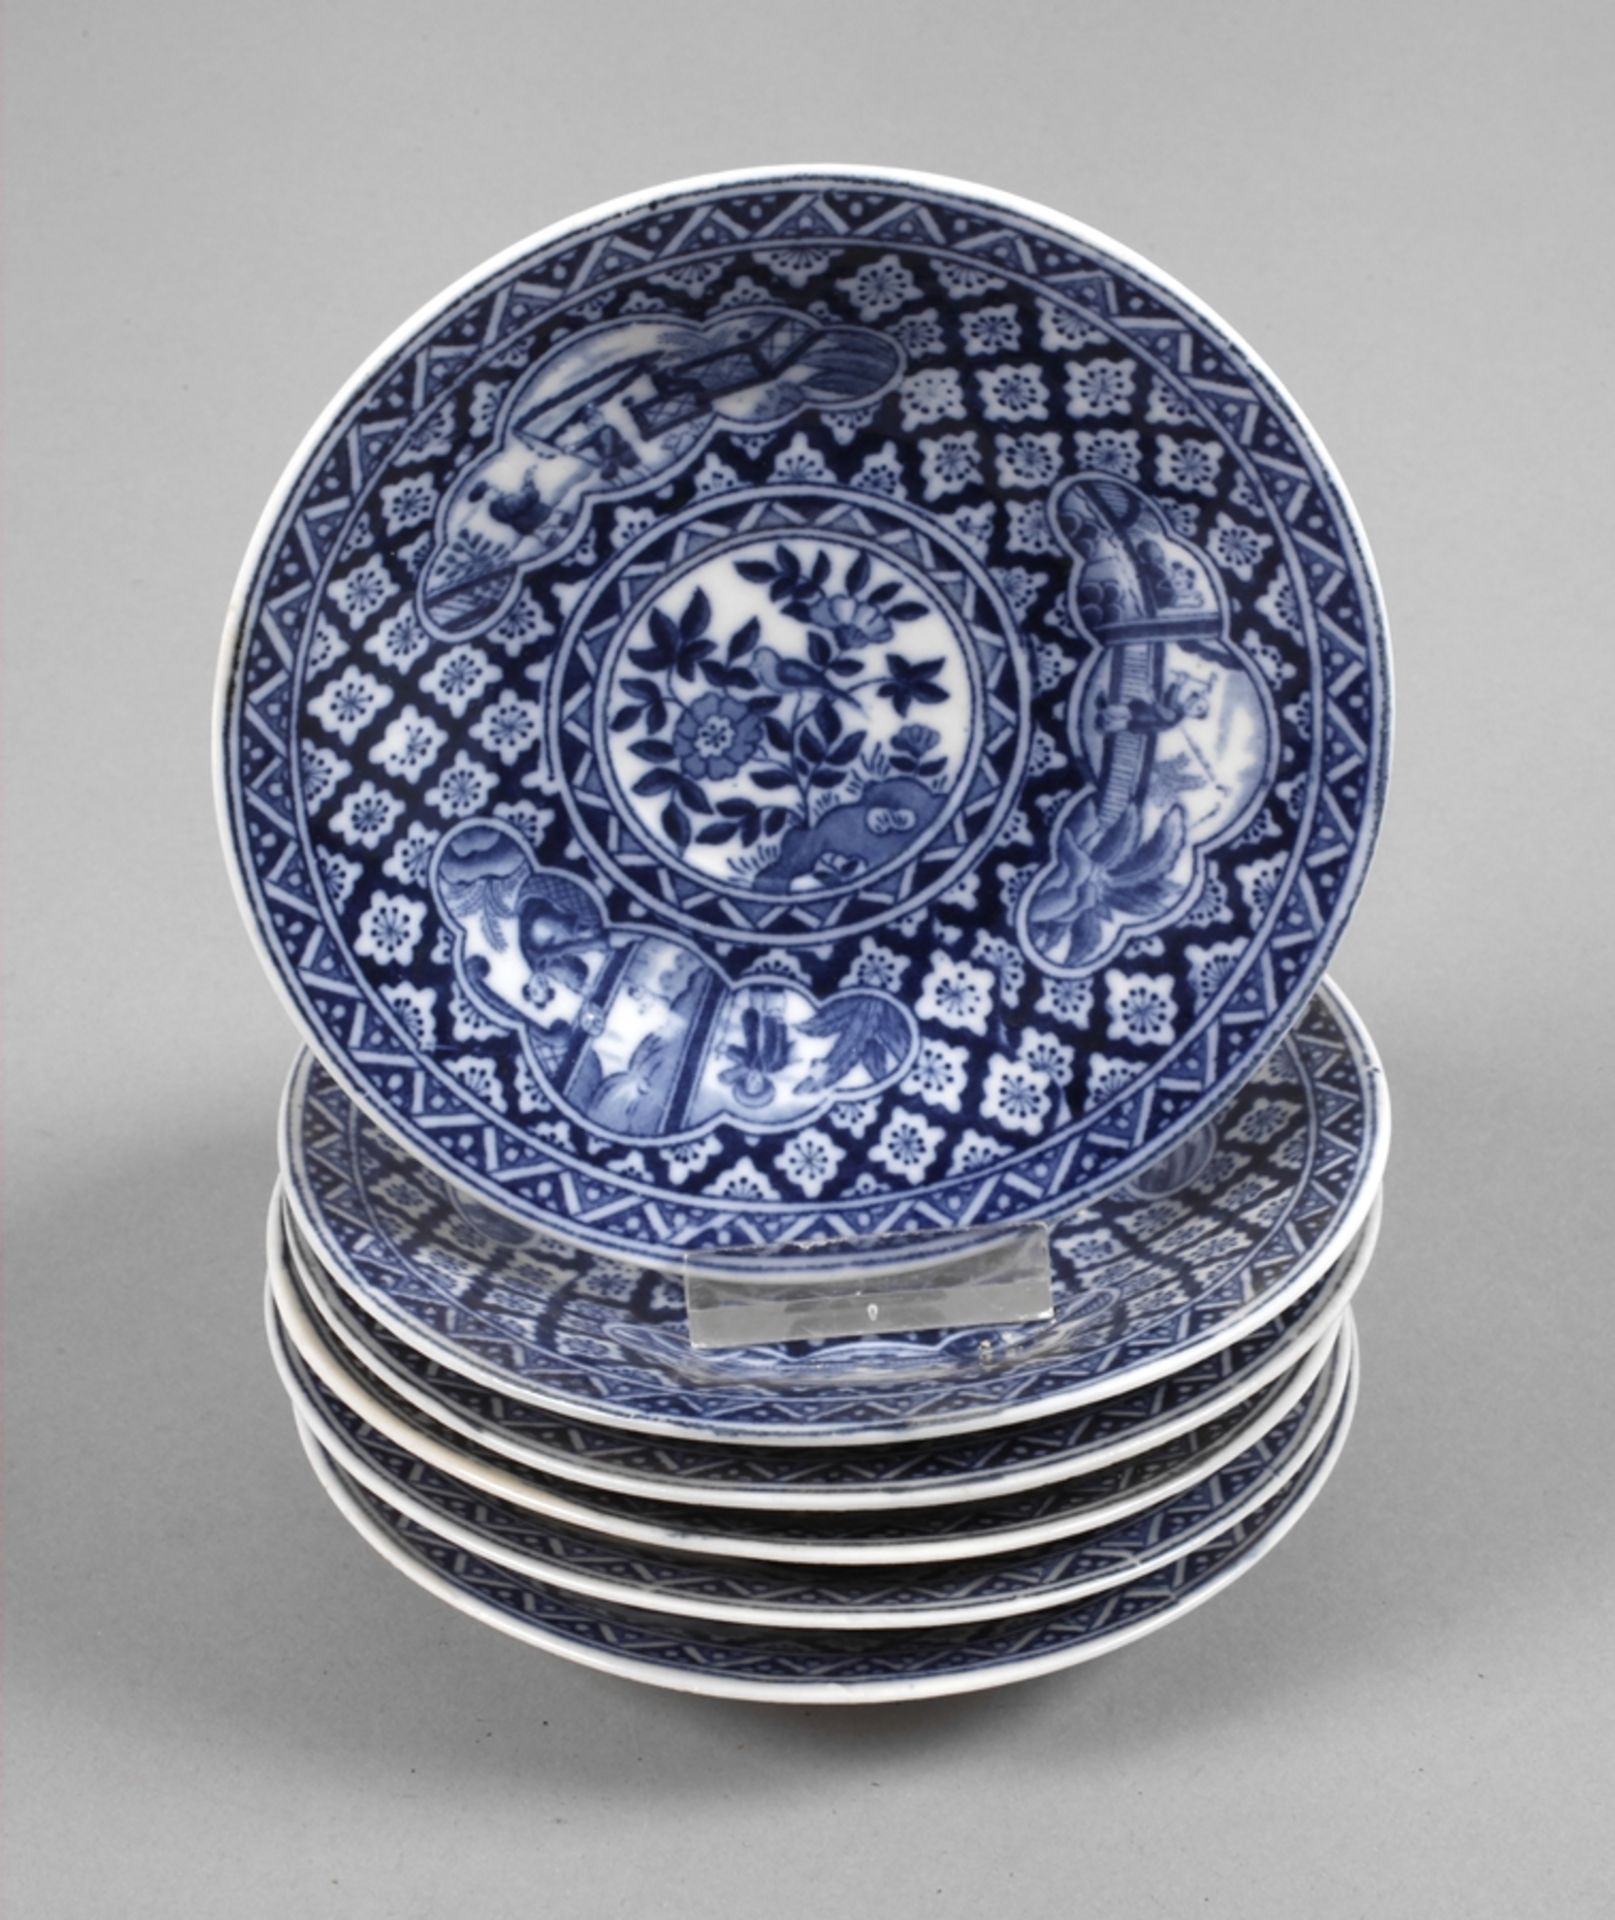 Six small decorative plates